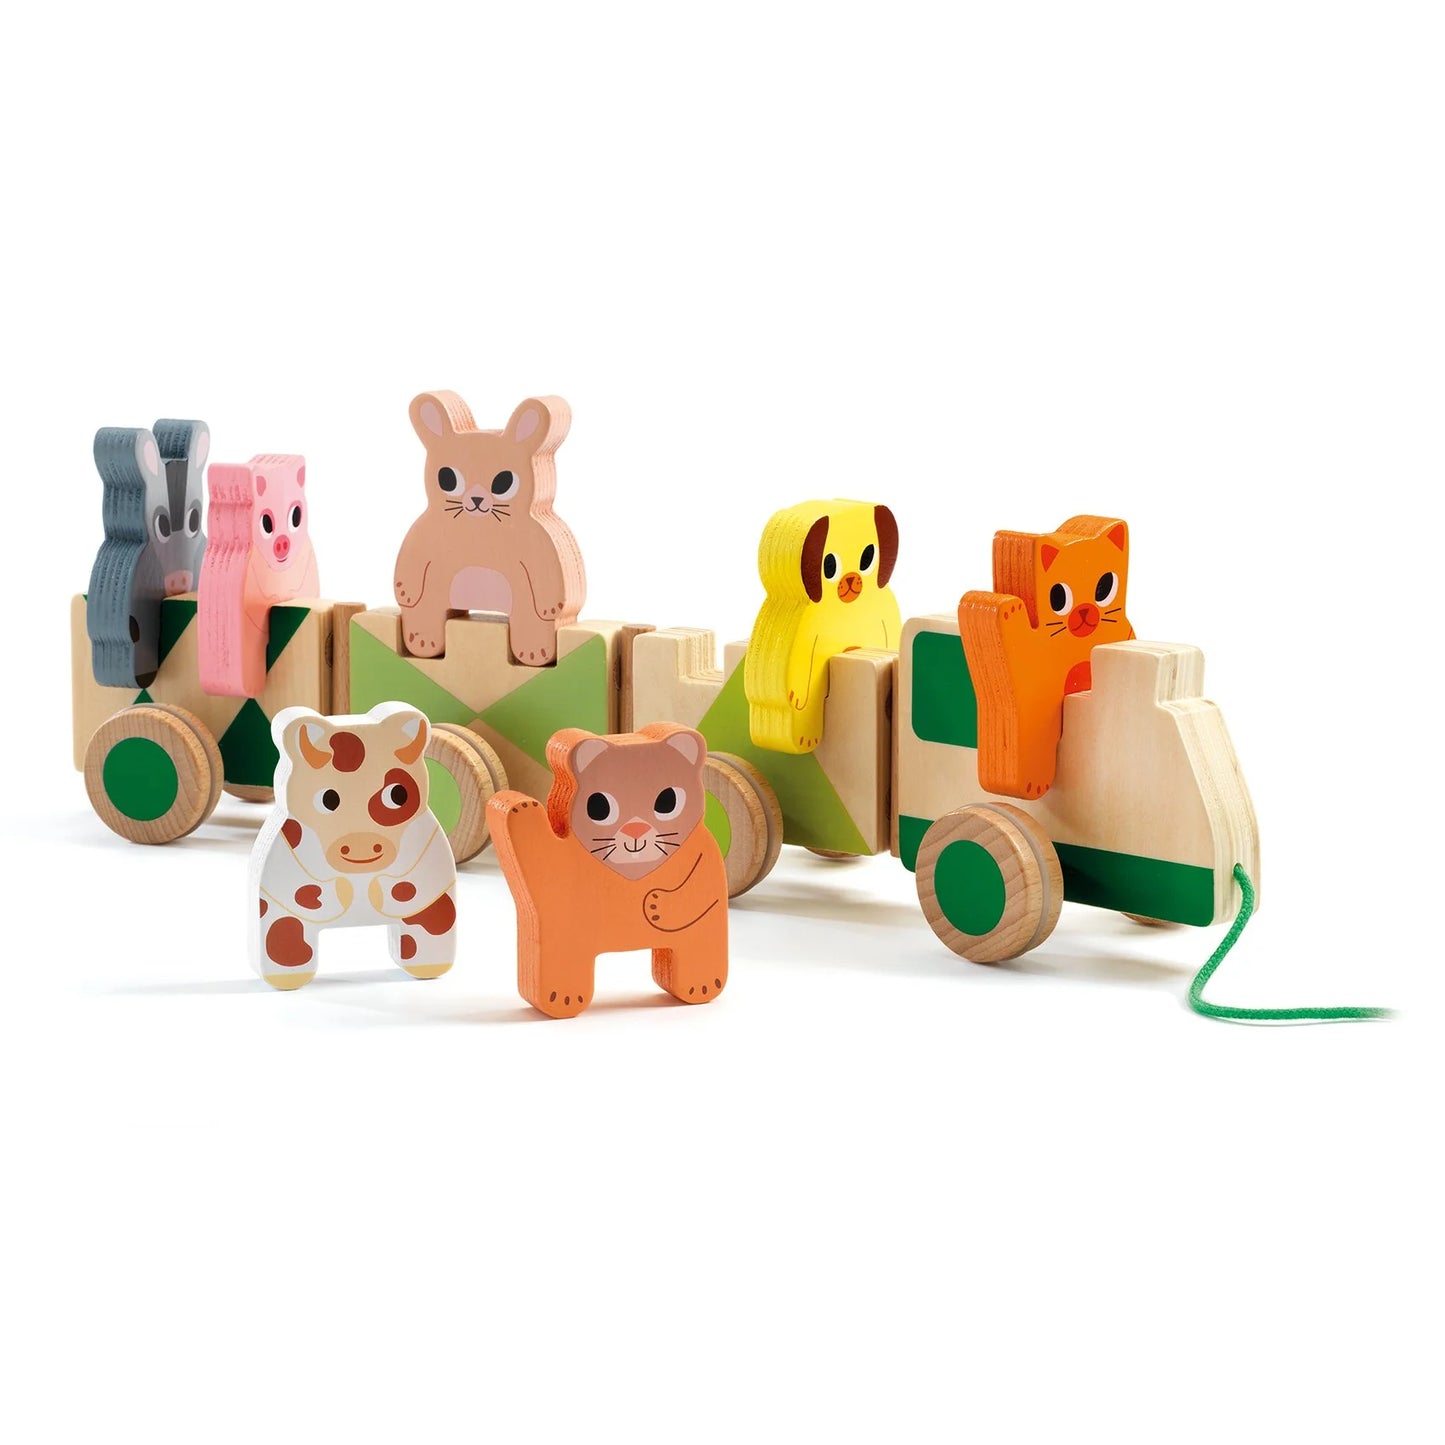 Trainimo Farm Wooden Pull-Along Activity Toy